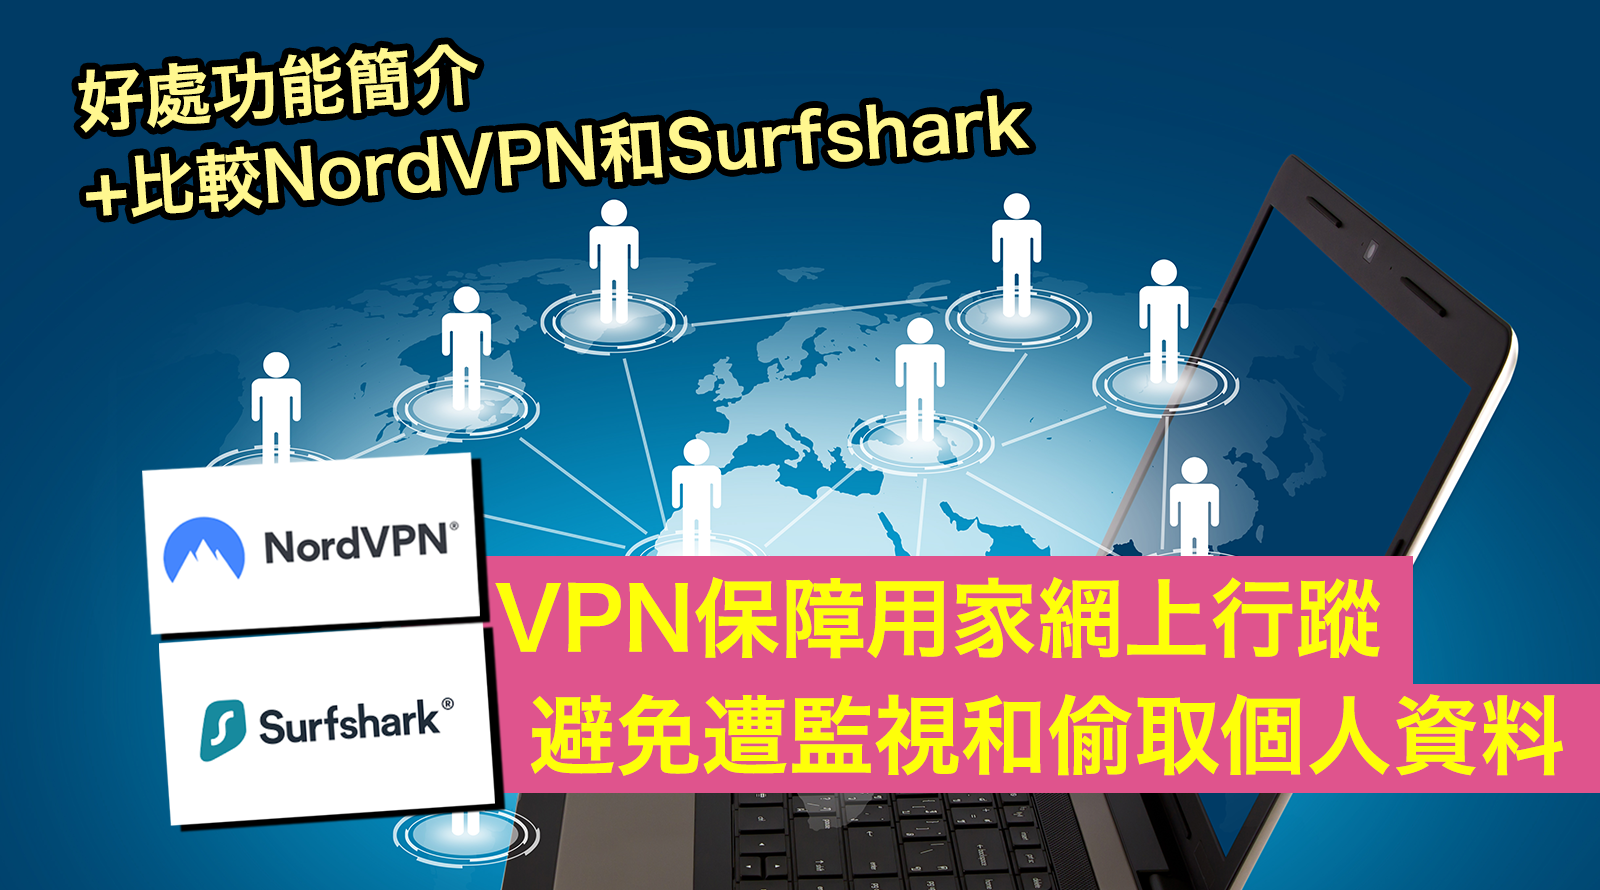 VPN保障用家網上行蹤